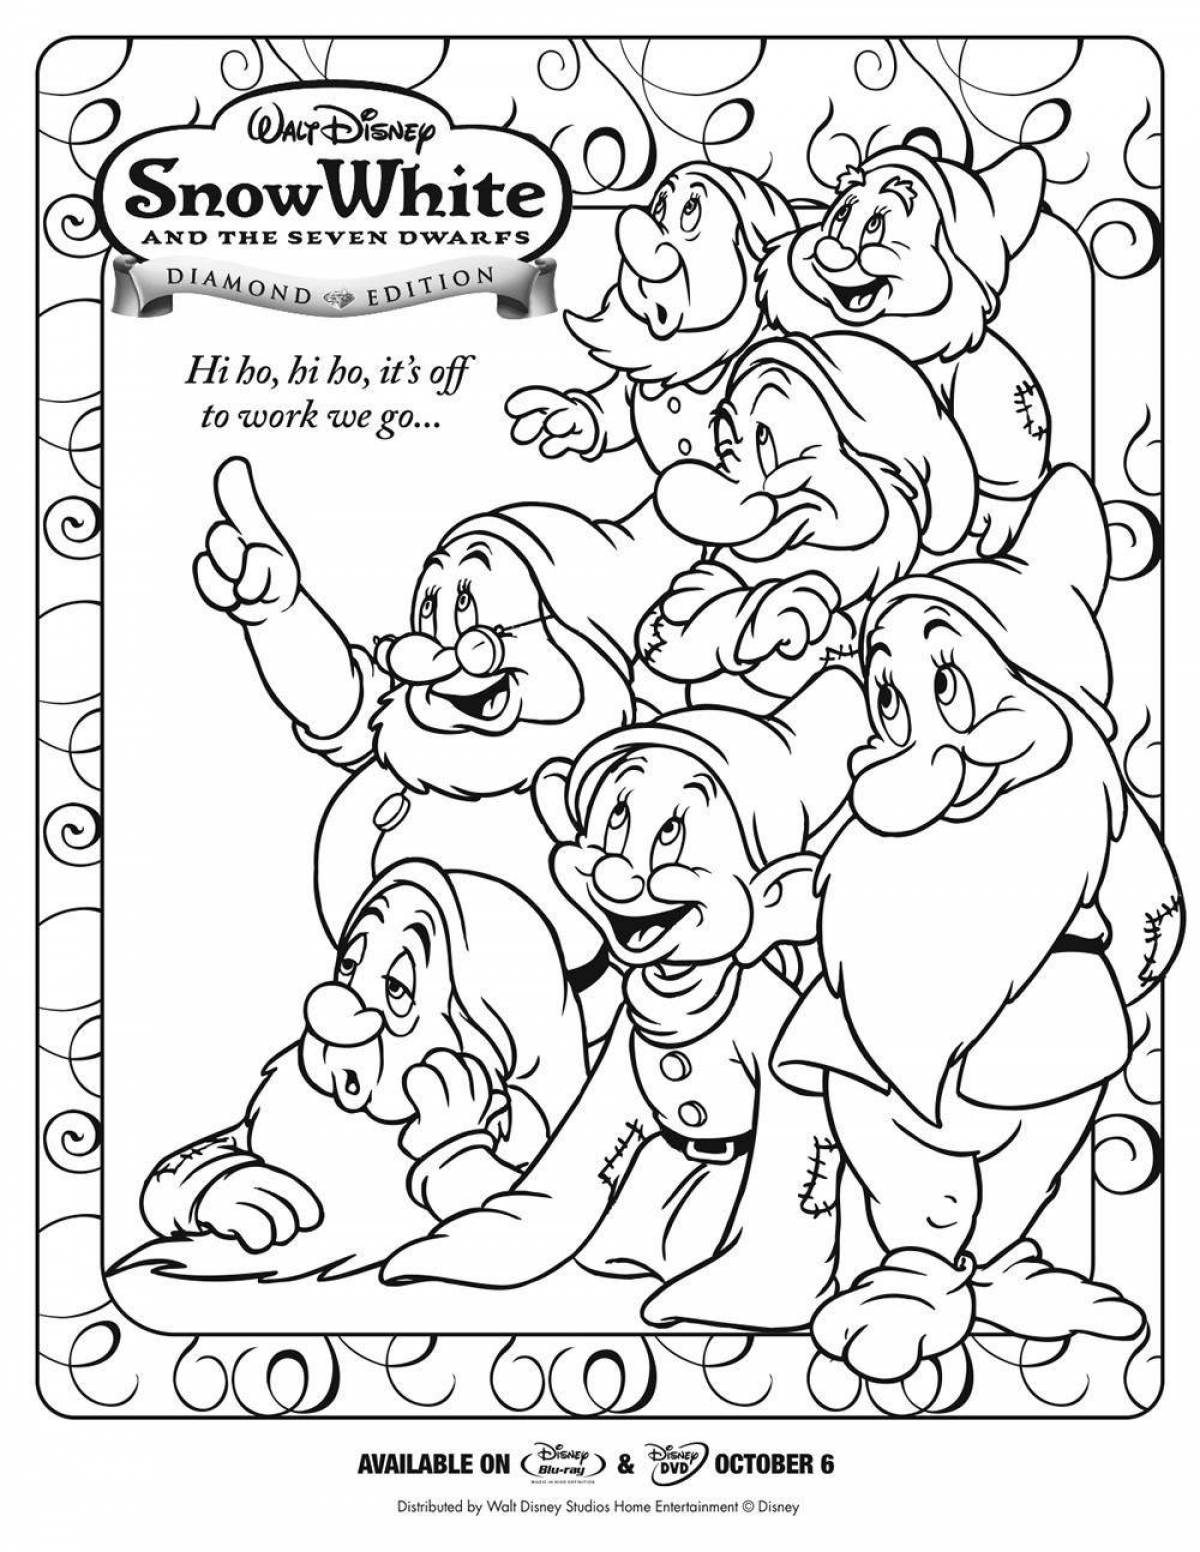 Charming seven dwarfs coloring book